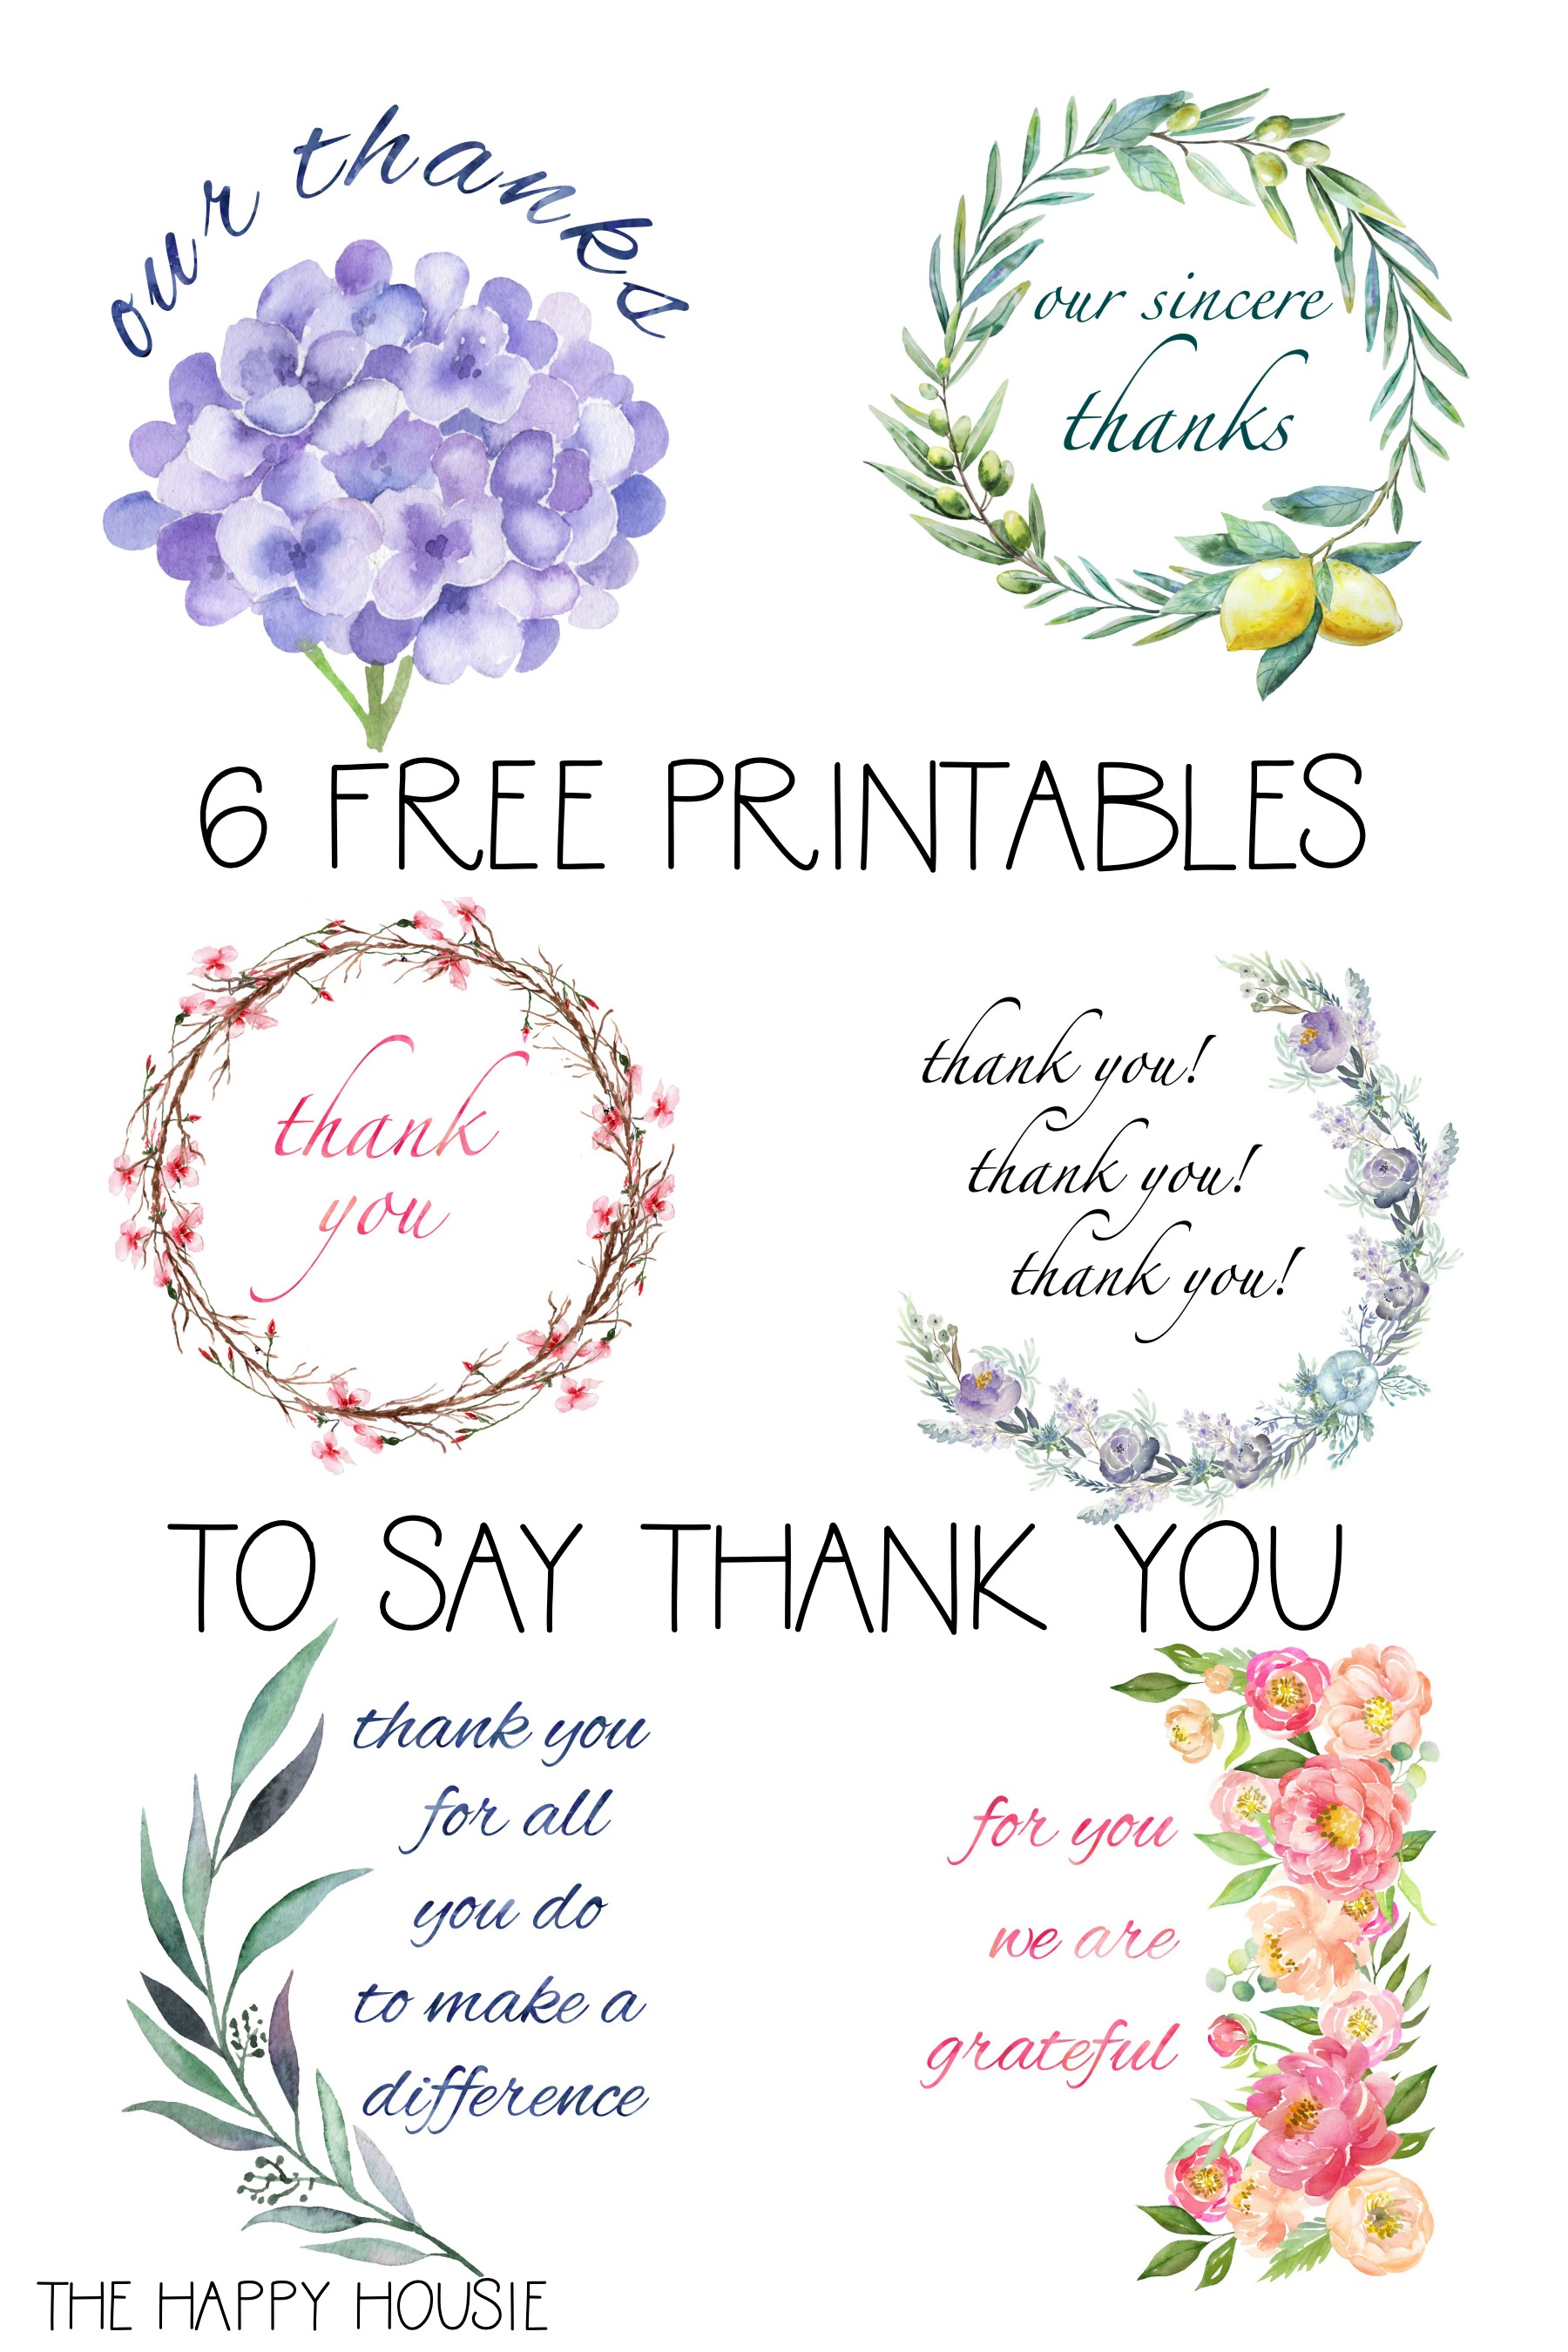 Thank You and Gratitude Free Printables